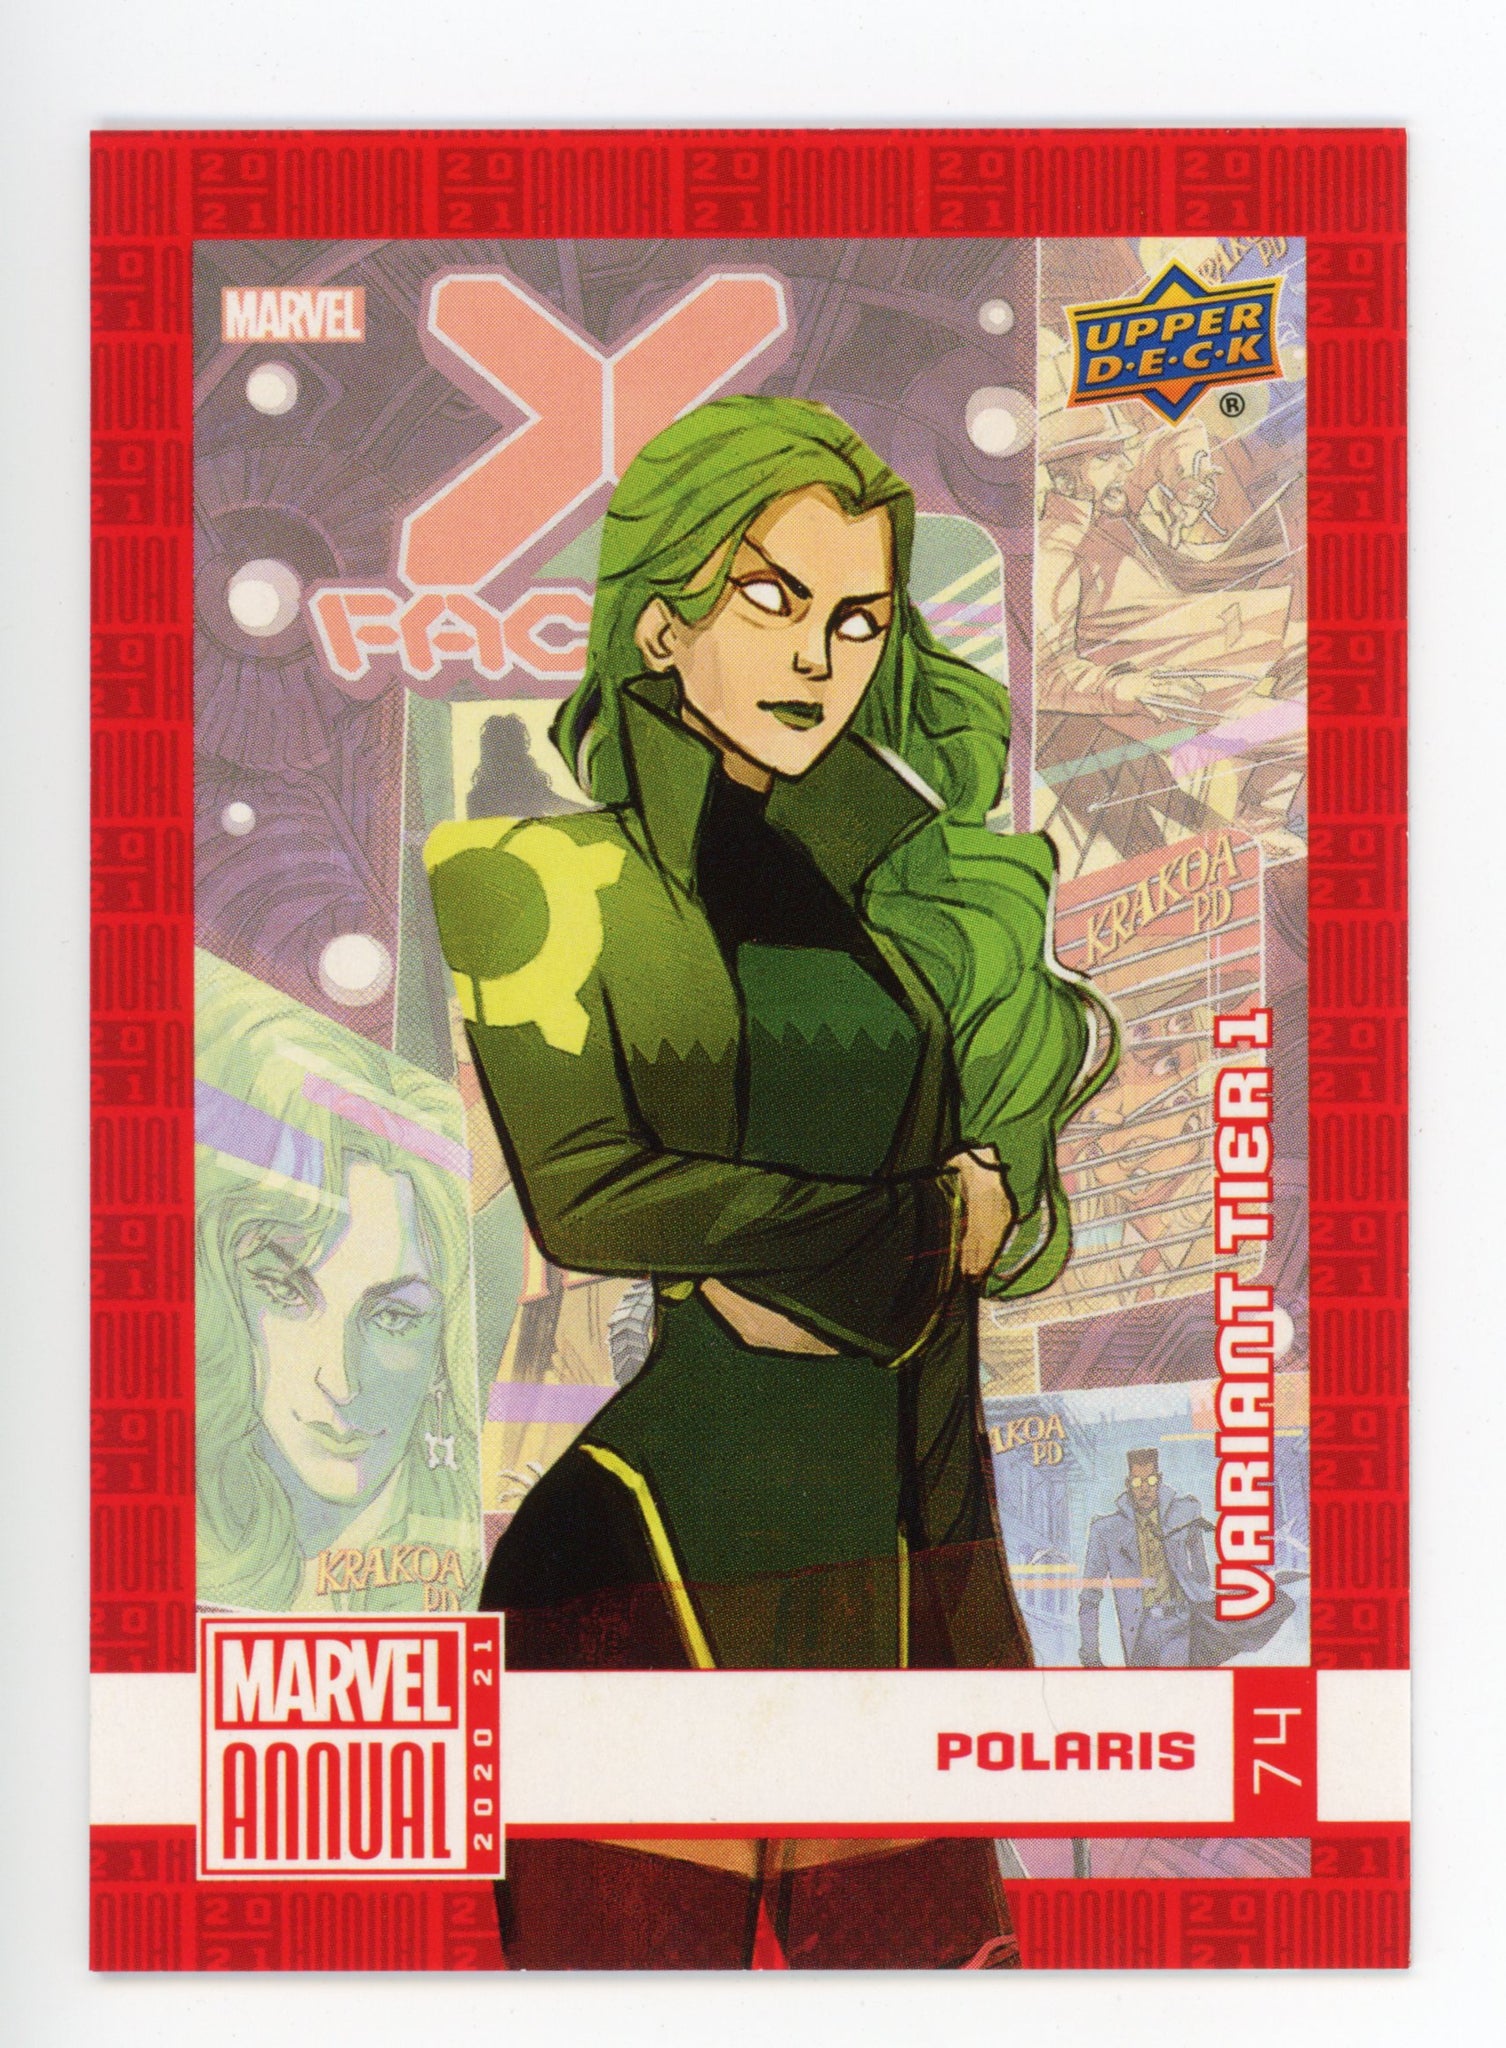 2020-2021 Polaris Variant Tier 1 Upper Deck Marvel Annual # 74